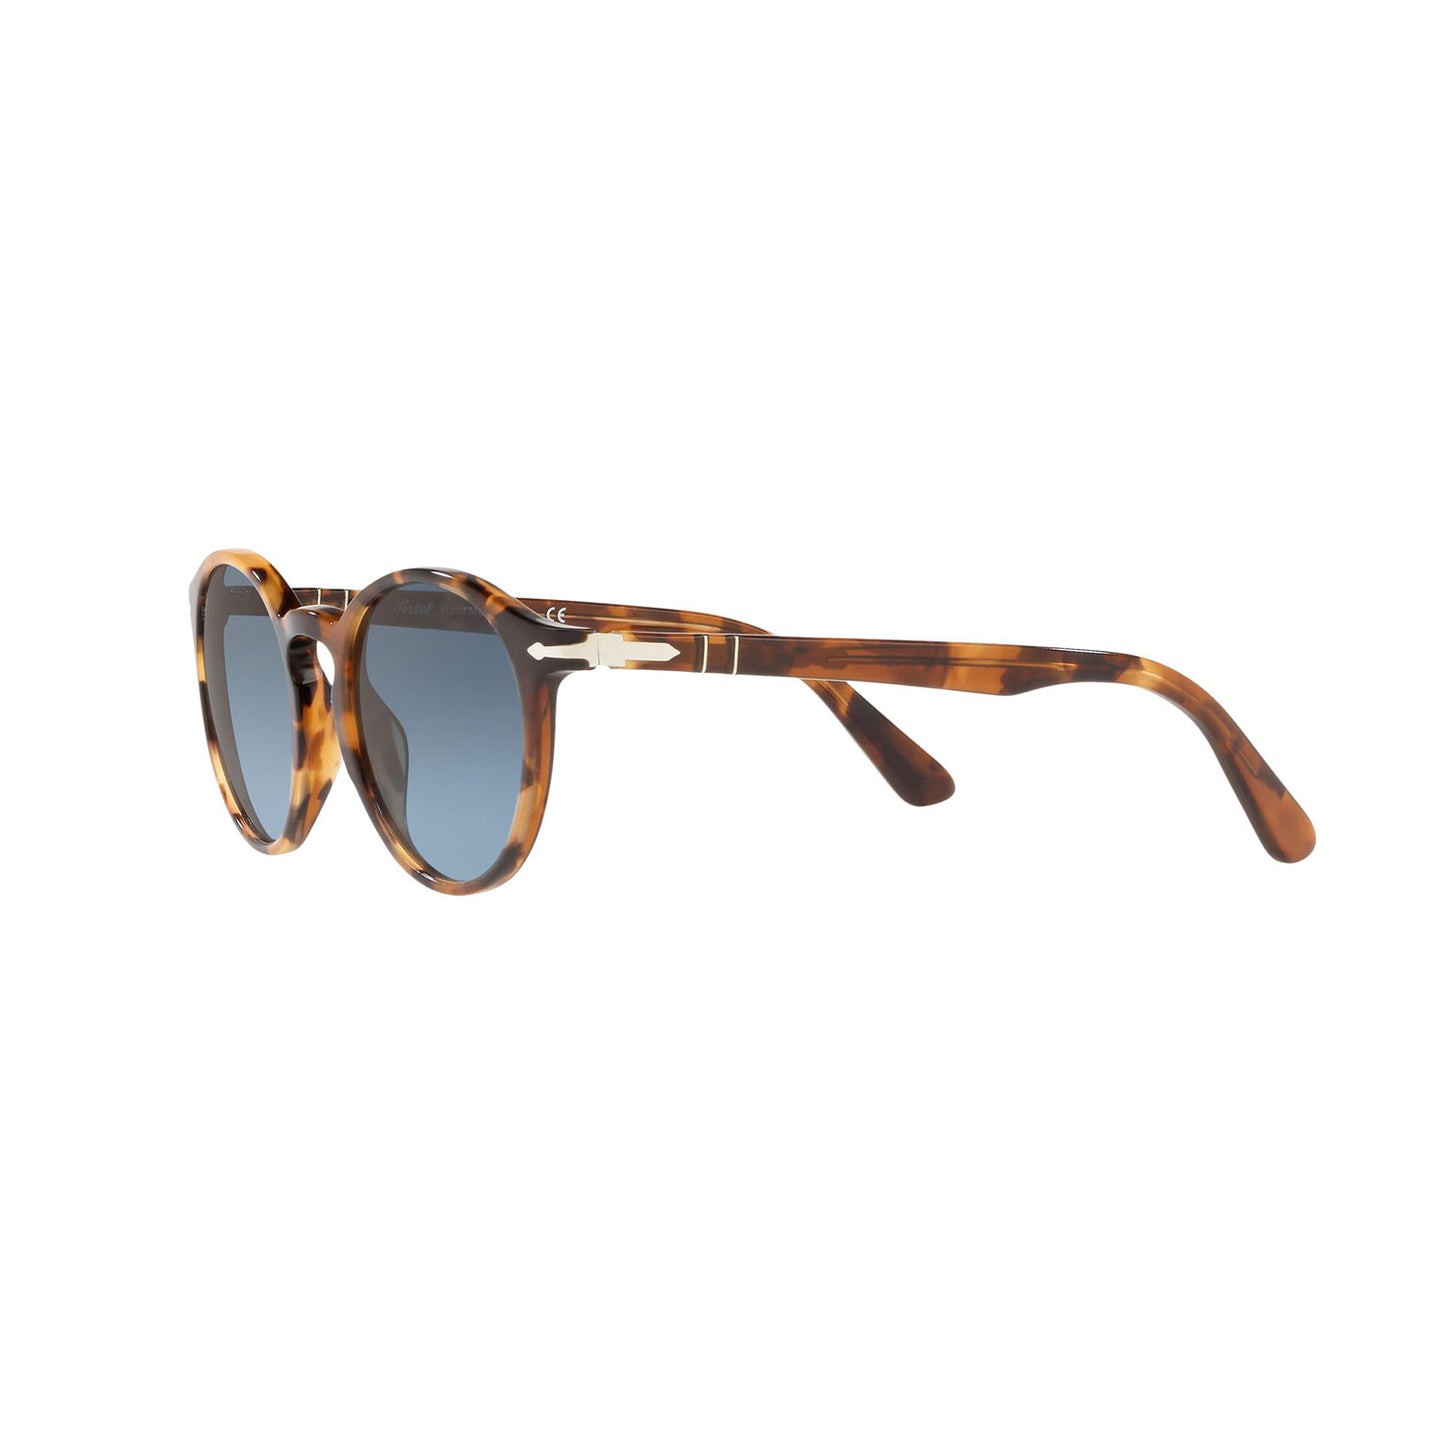 sunglasses persol 3171 color brown size 52 